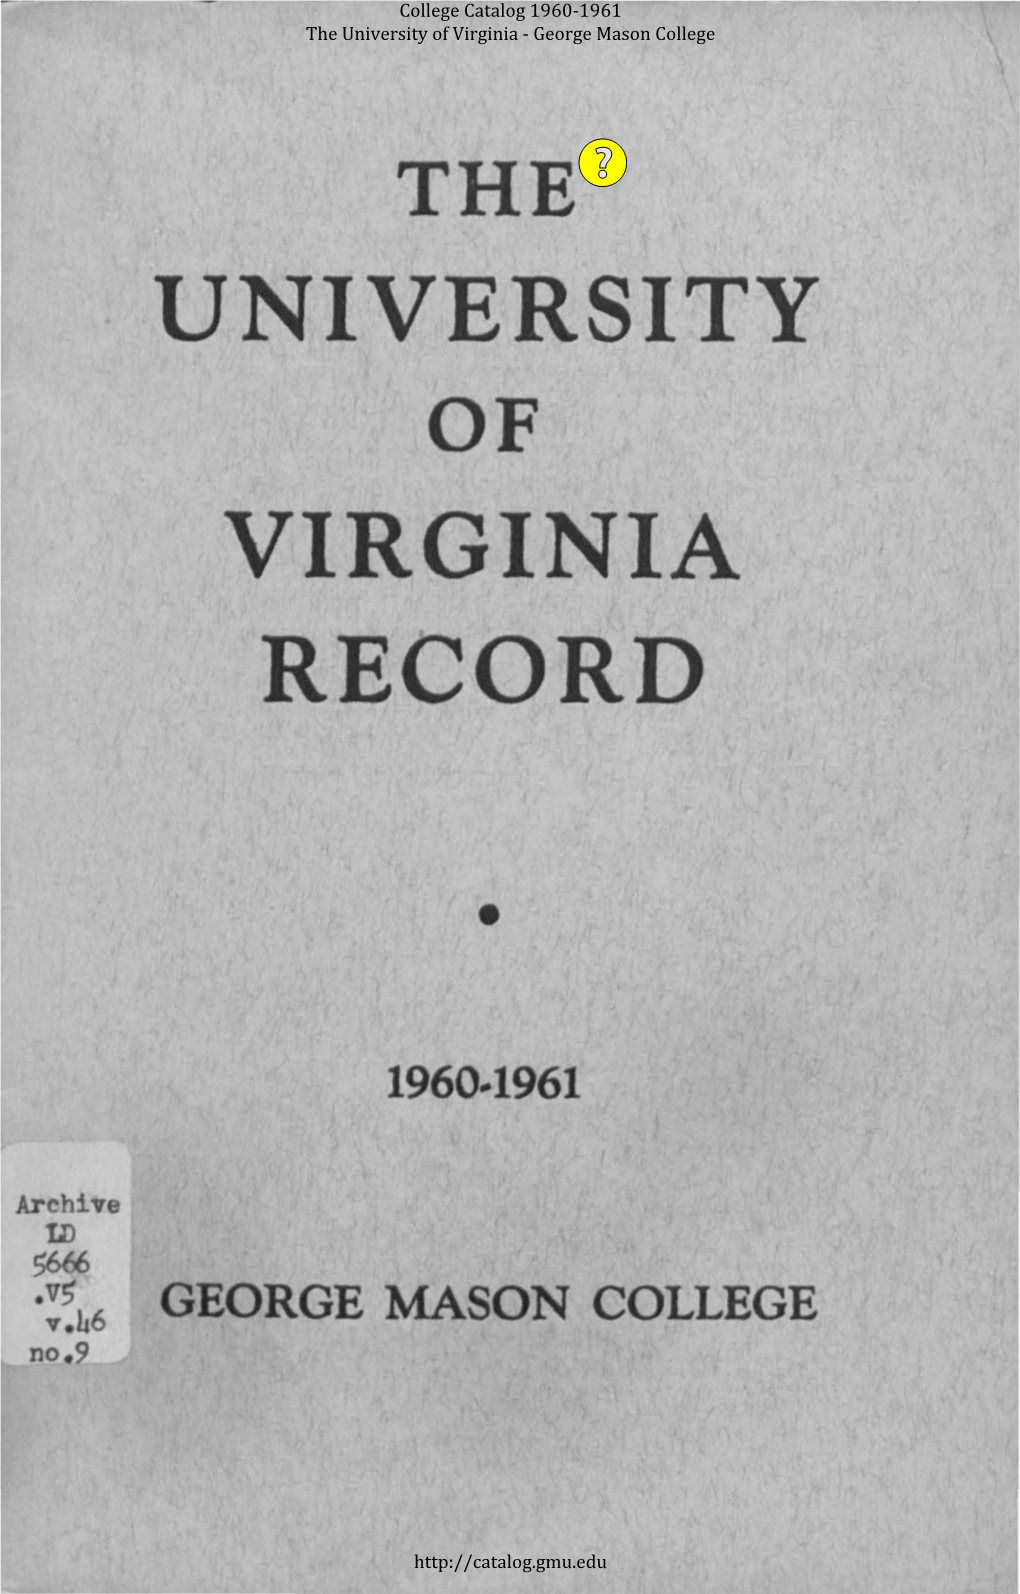 1960-1961 the University of Virginia - George Mason